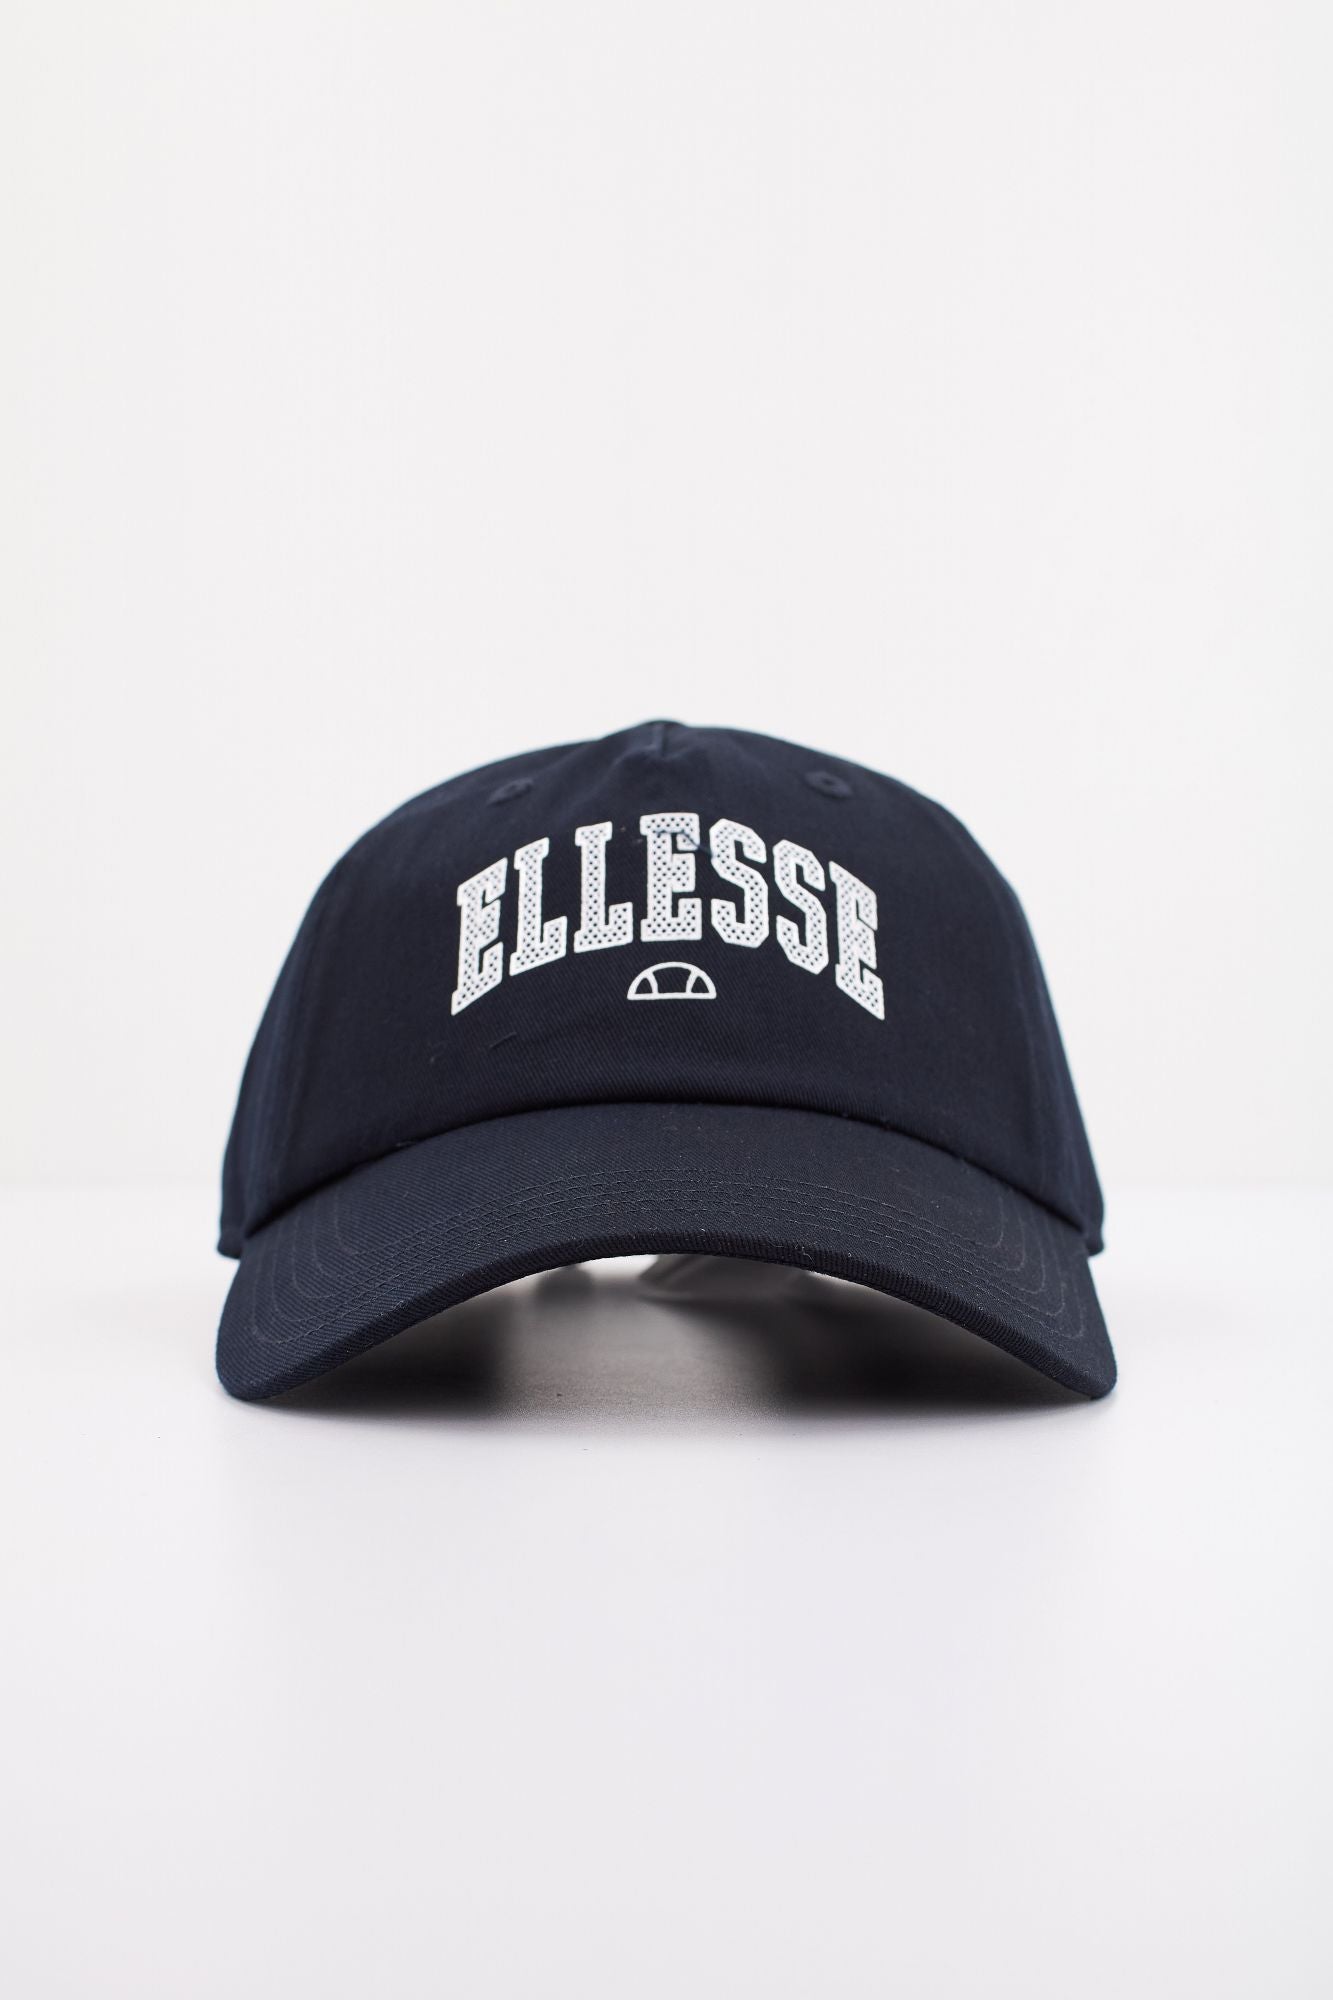 ELLESSE  BETANO CAP en color AZUL (1)